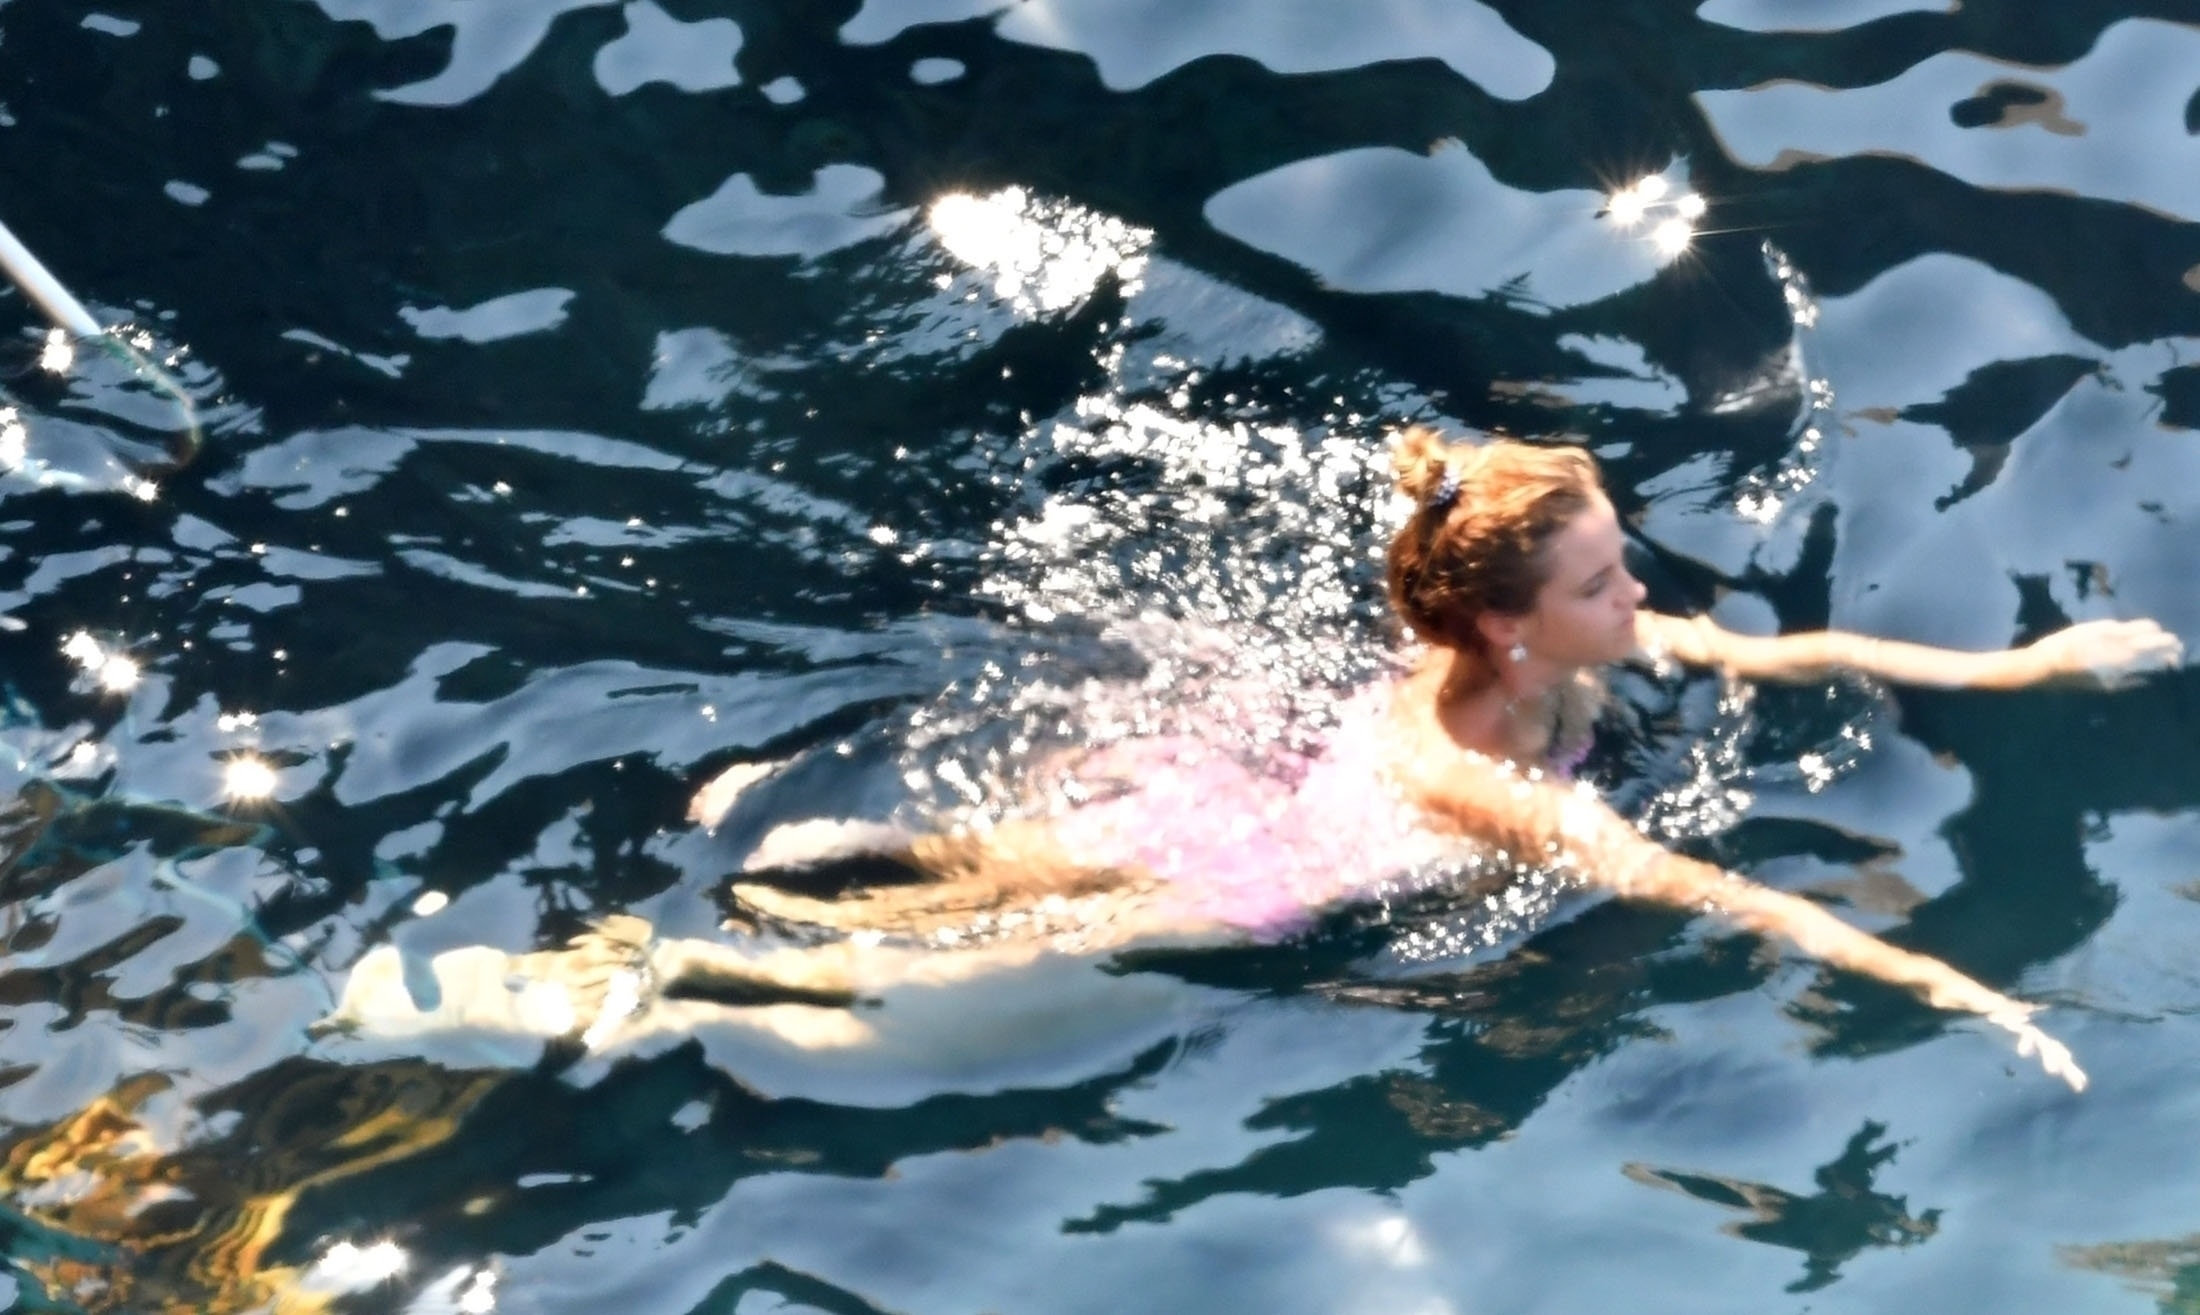 Emma Watson 2020 : Emma Watson - In Pink bikini in Positano - Italy (hq)-.....